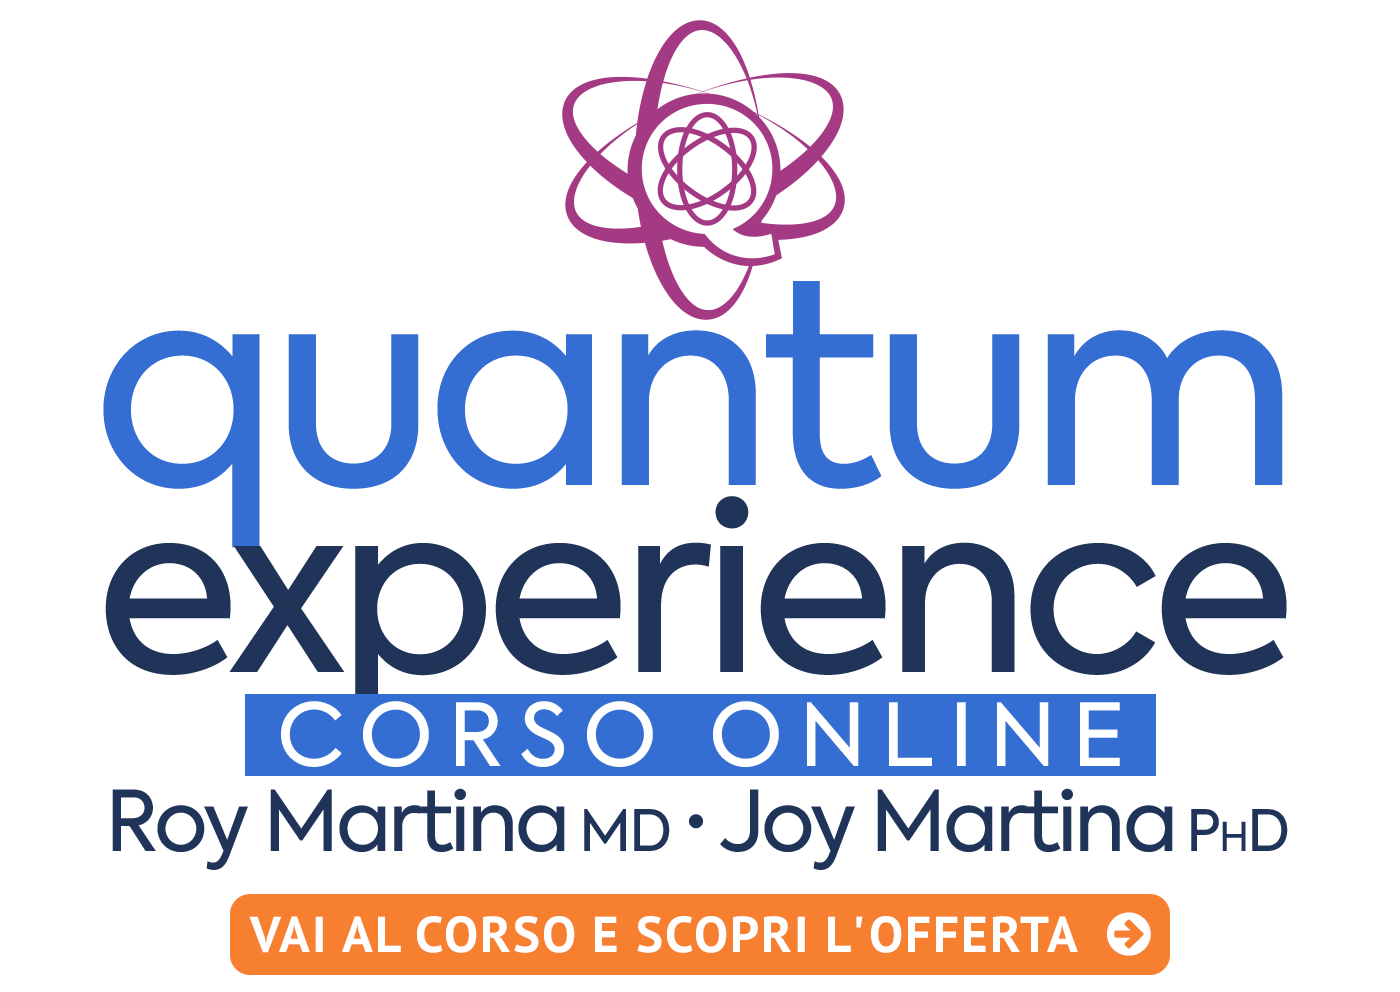 Quantum Experience - Corso Online